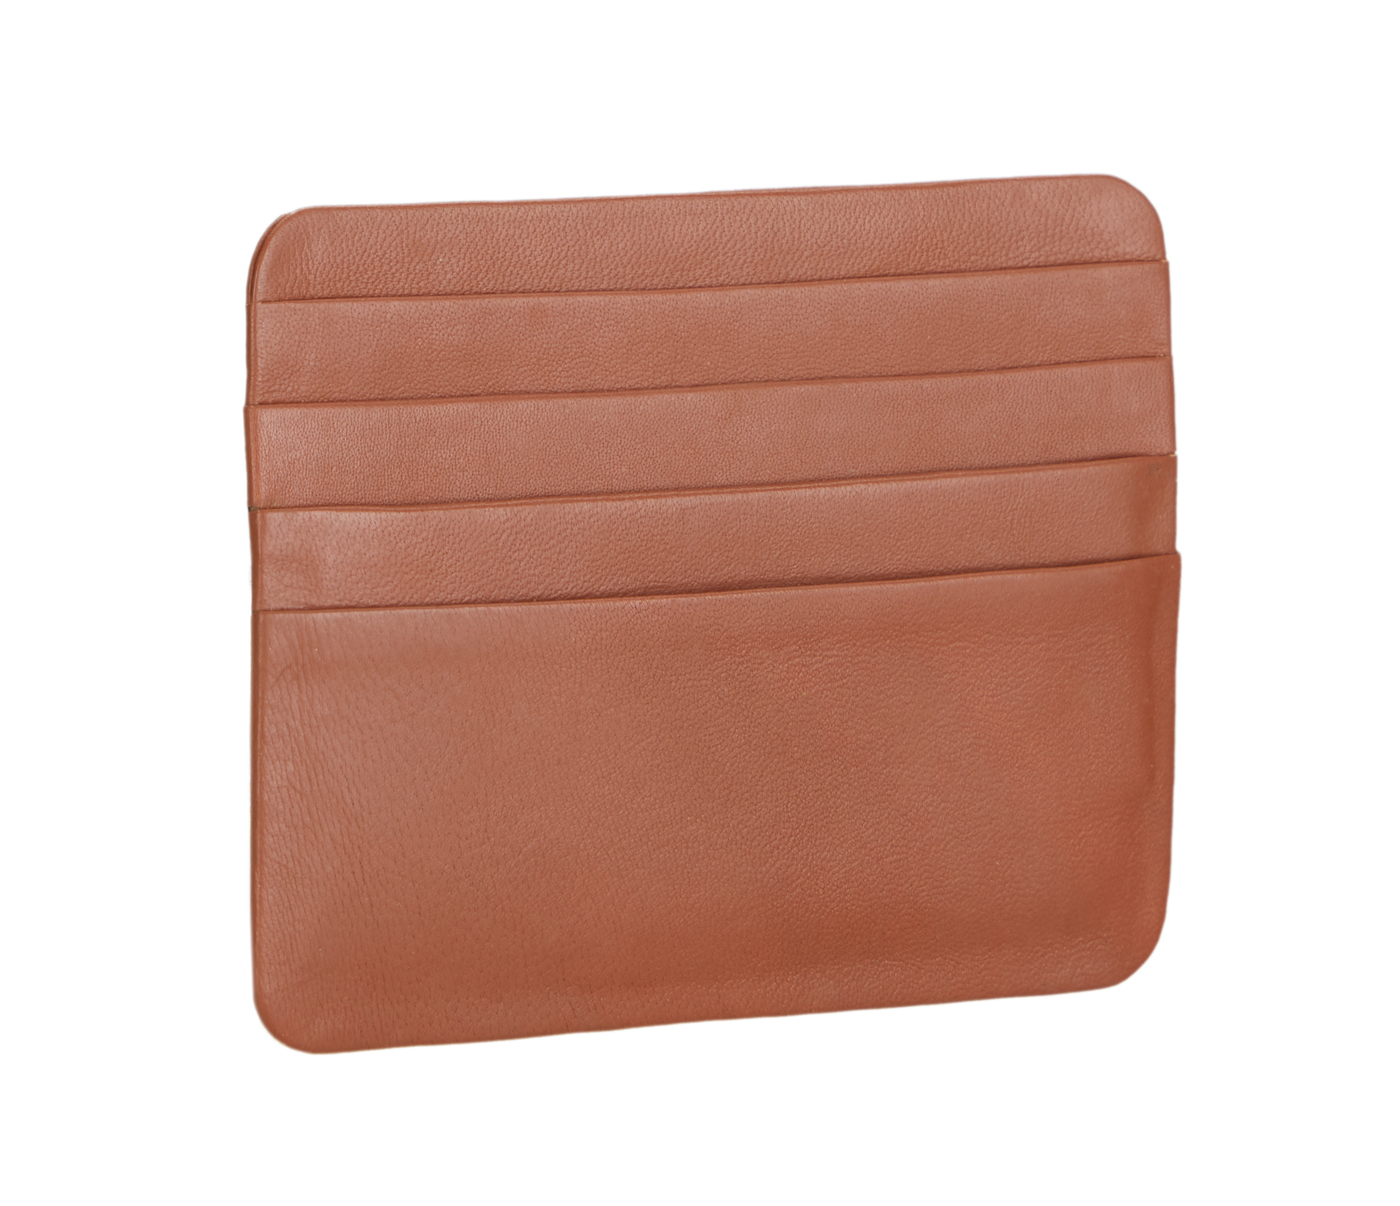 VW7--Ultra Slim Credit Card Case in Genuine Leather - Tan